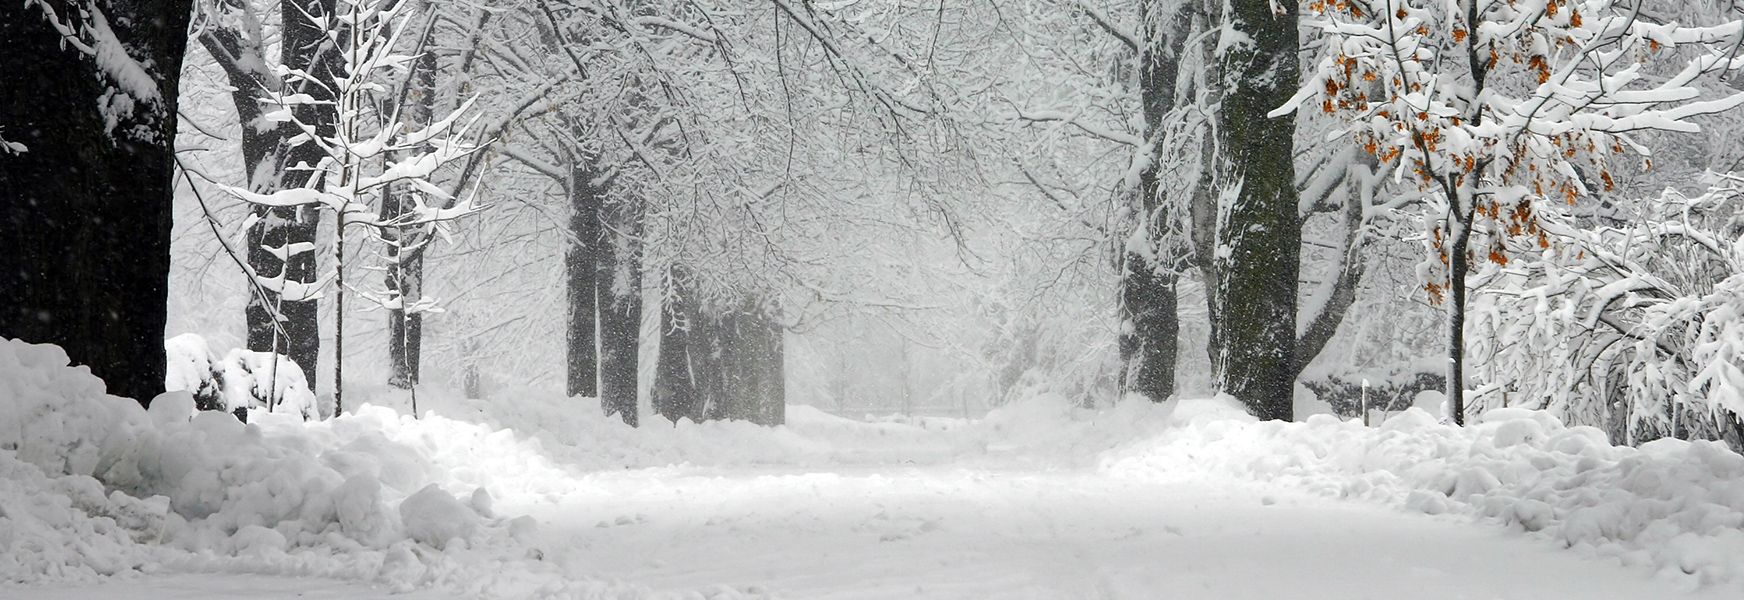 Fresh snow on trees and sidewalk